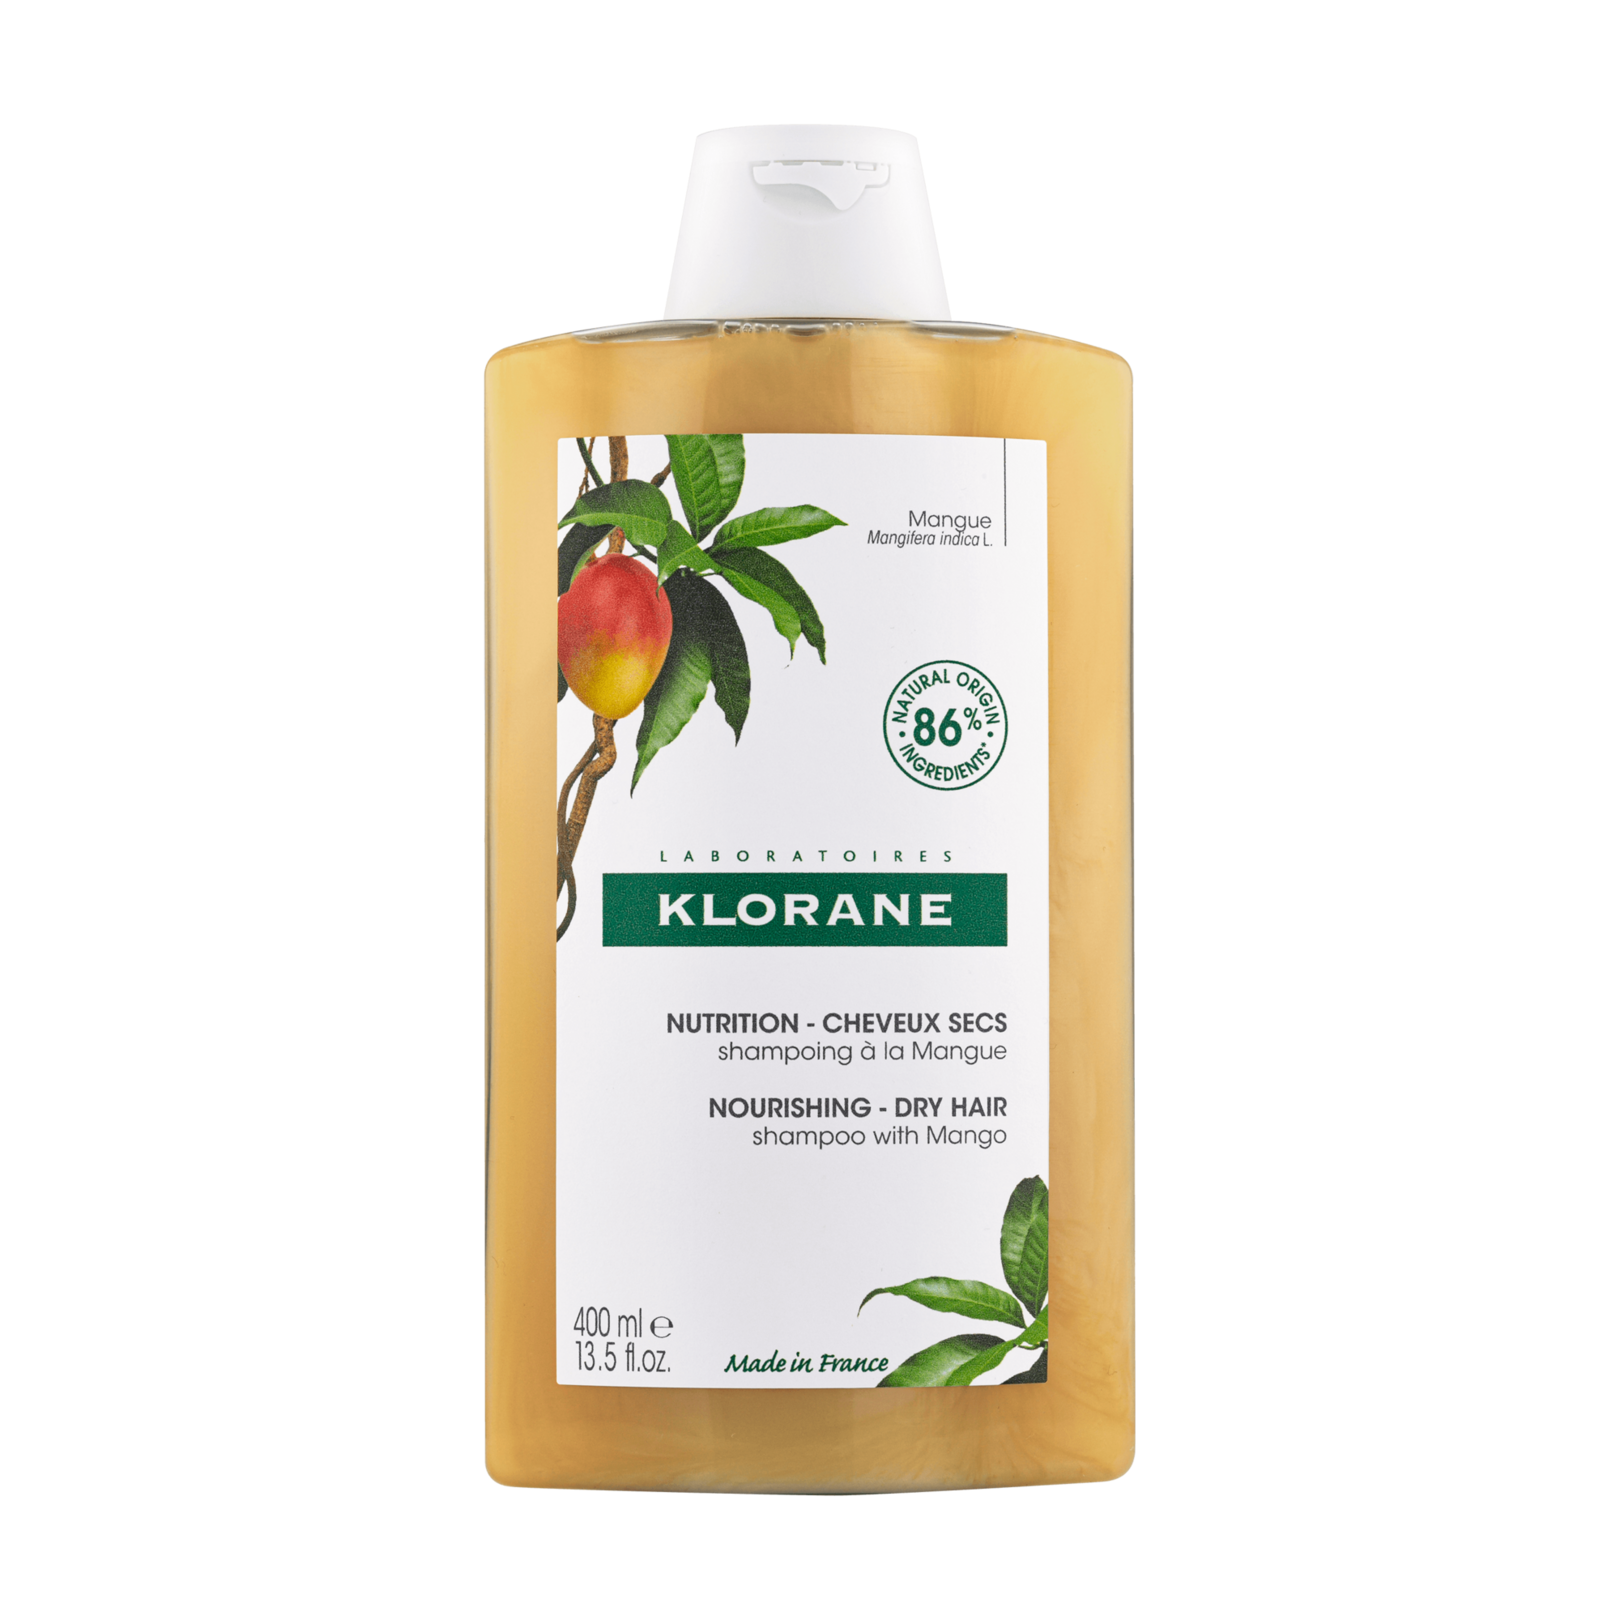 Nourishing Shampoo with Mango butter - Dry Hair